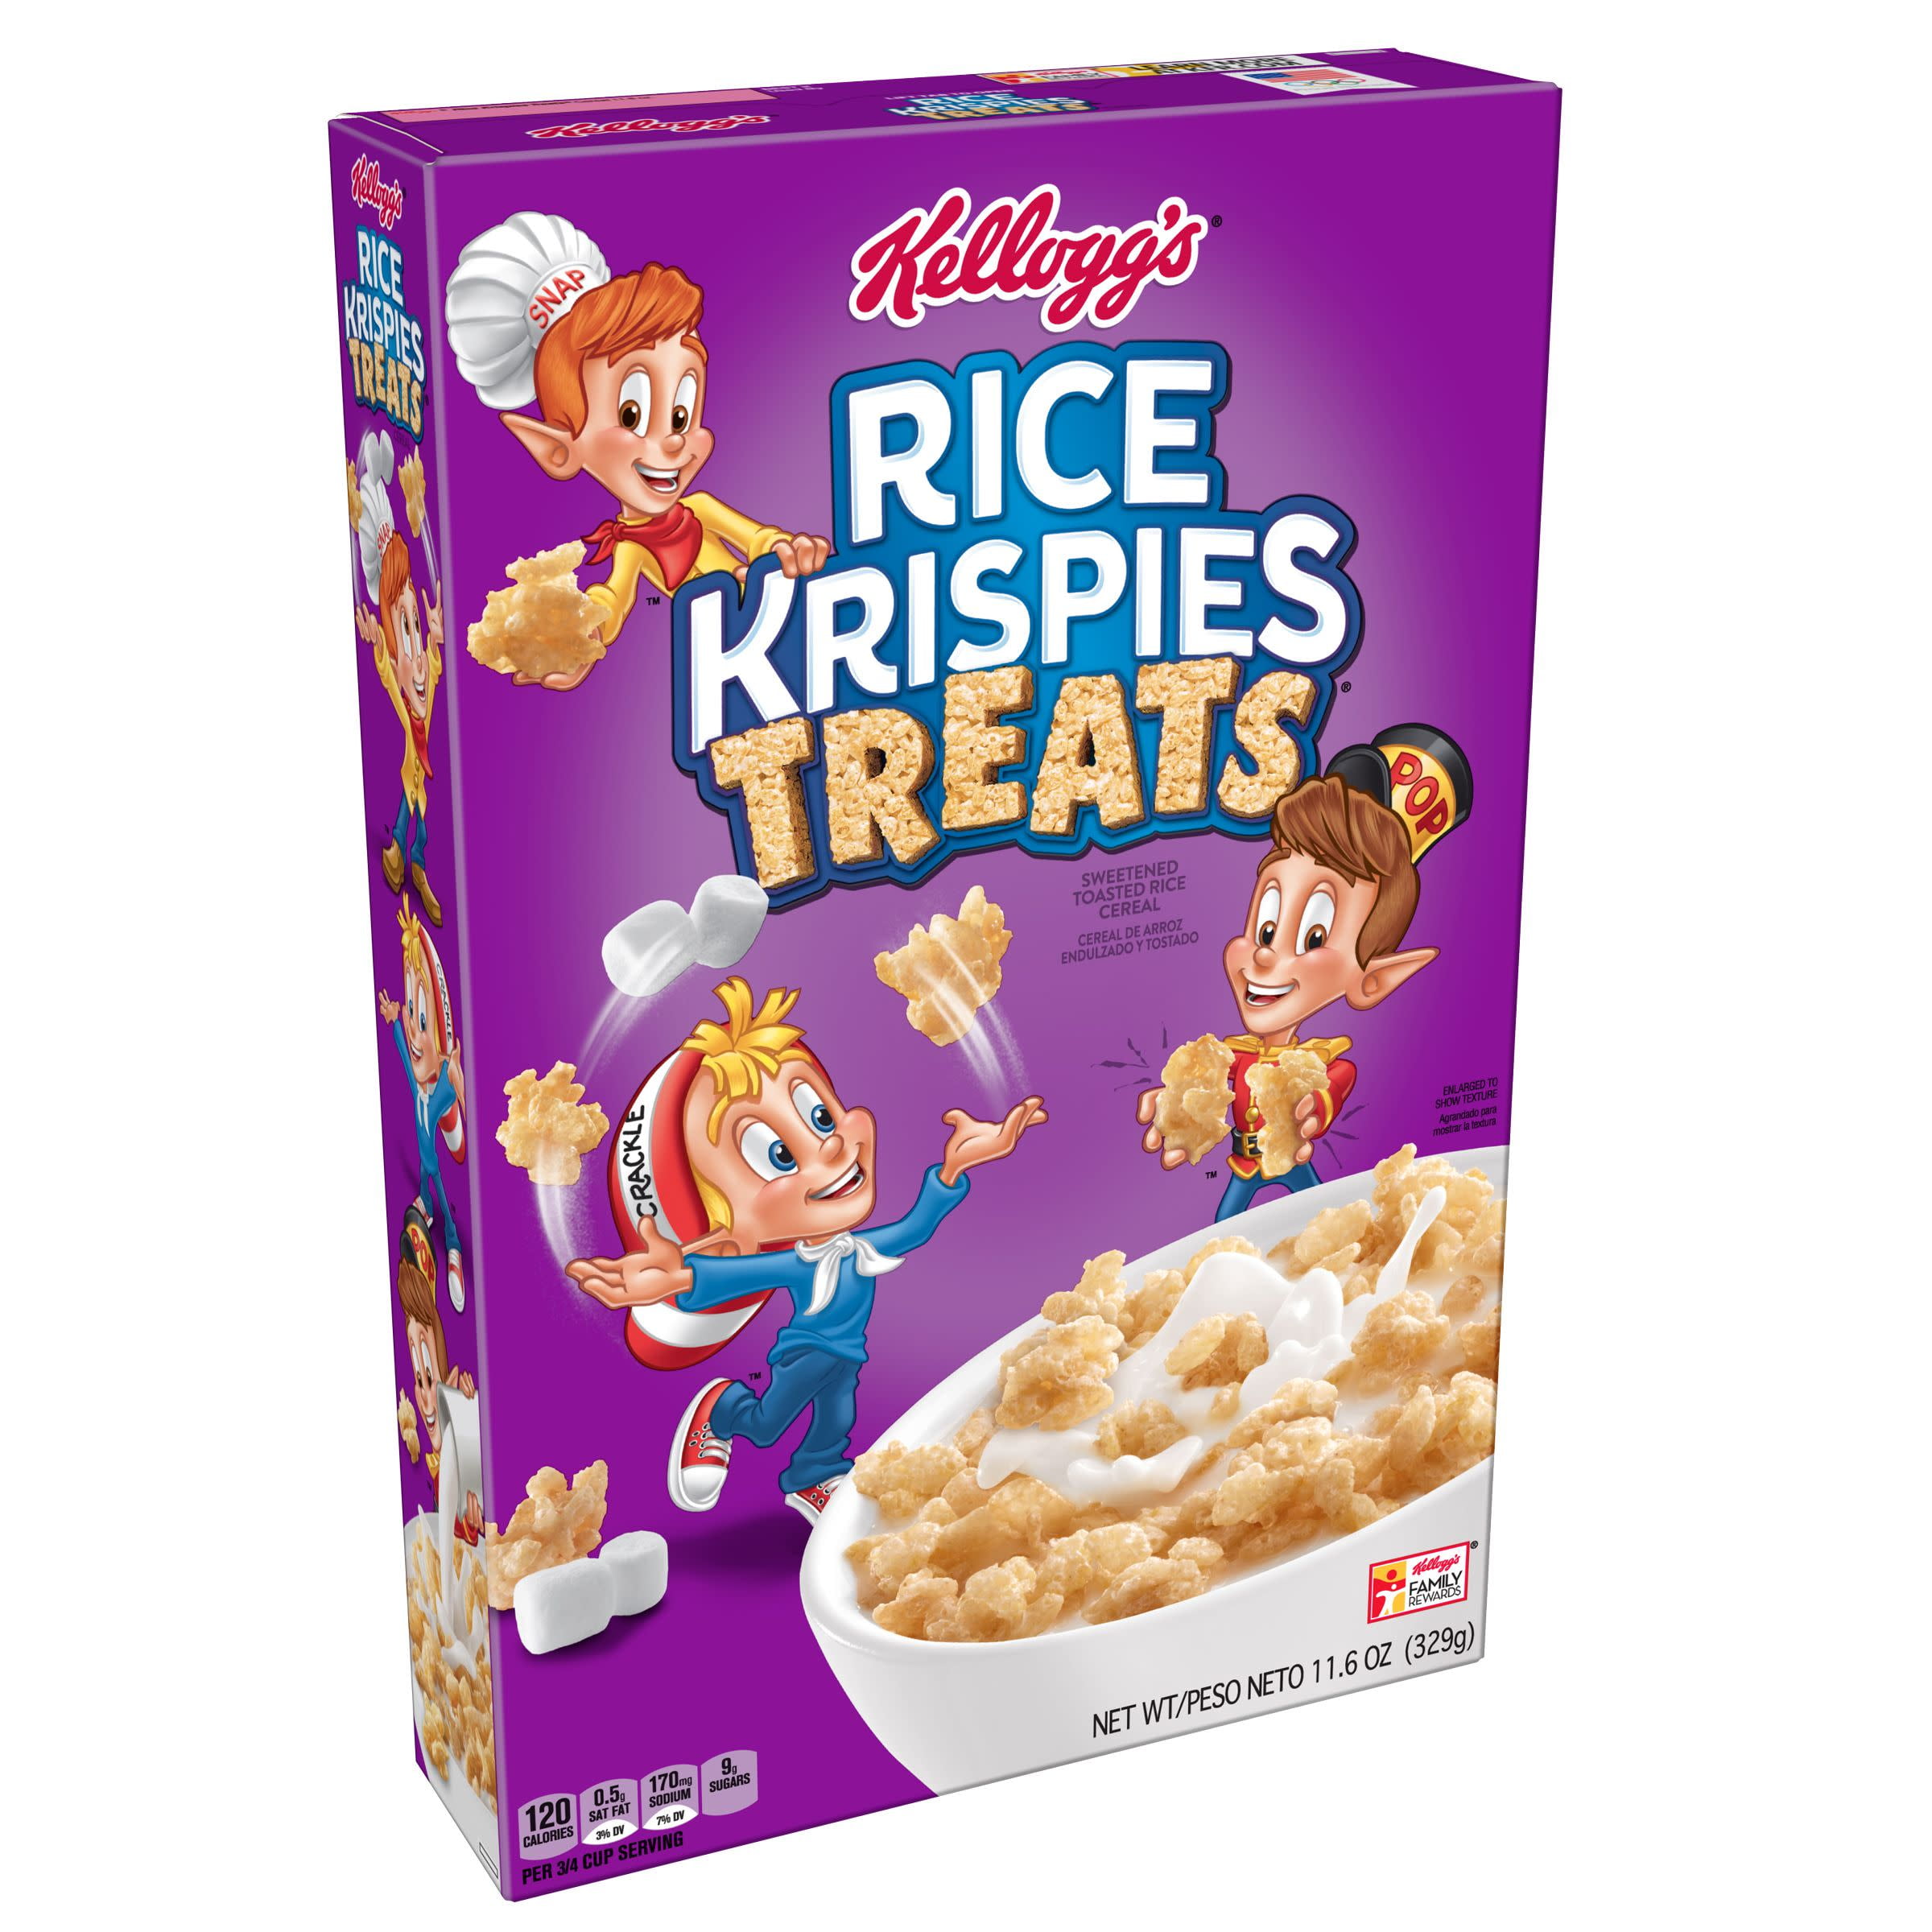 Kellogg's Rice Krispies Treats, Breakfast Cereal, Original, 11.6 Oz ...